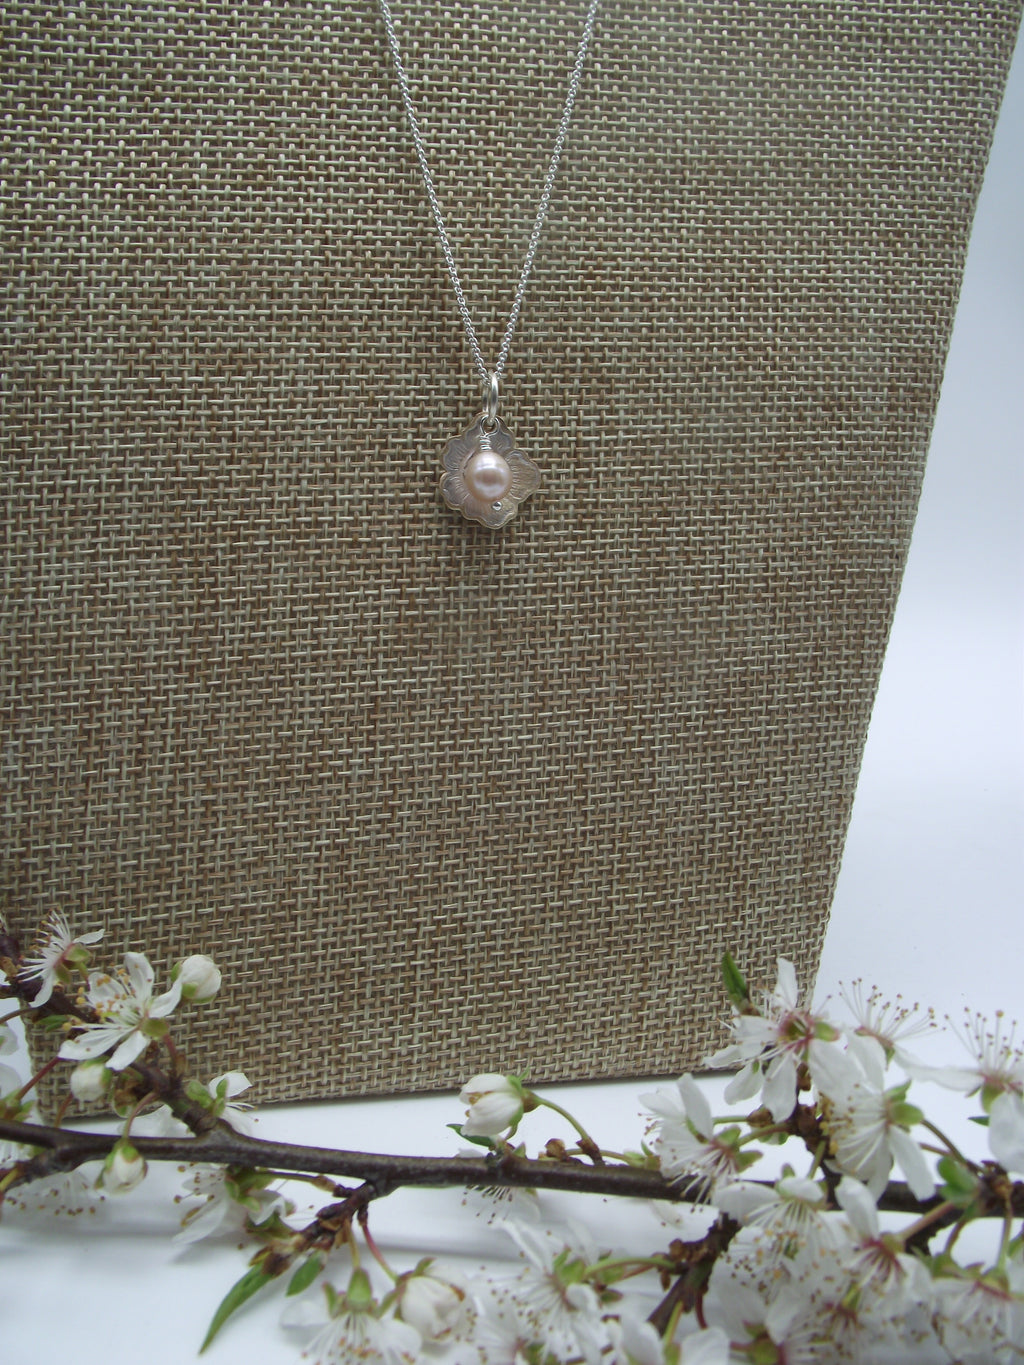 Cherry Blossom Necklace -03